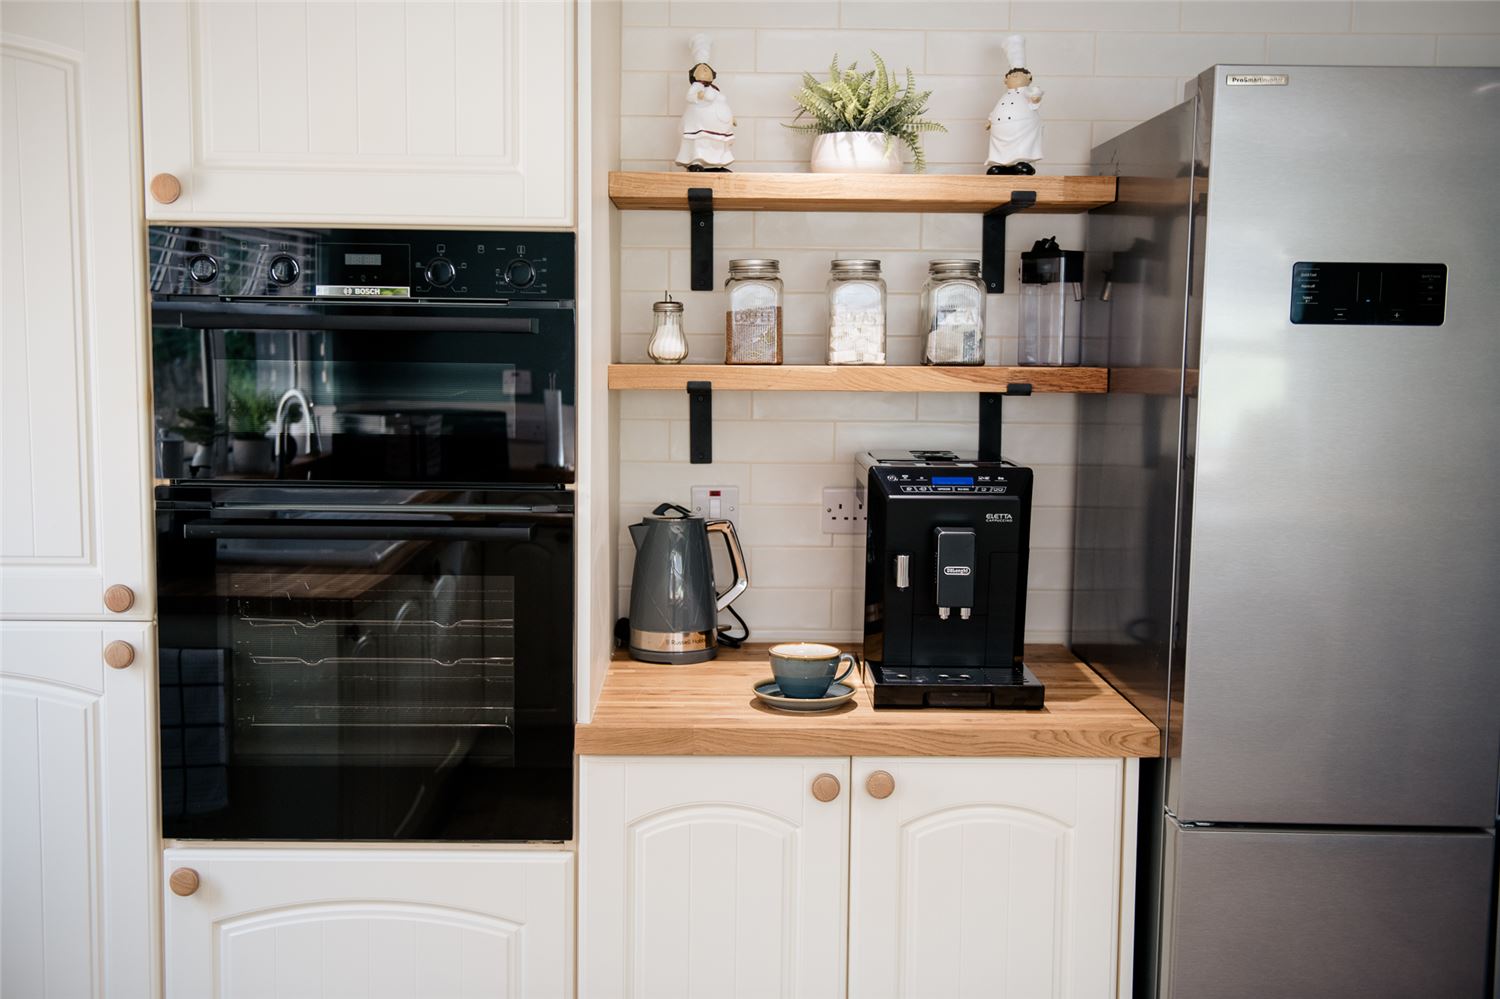 kitchen shelves, oven and fridge rothesay accommodation